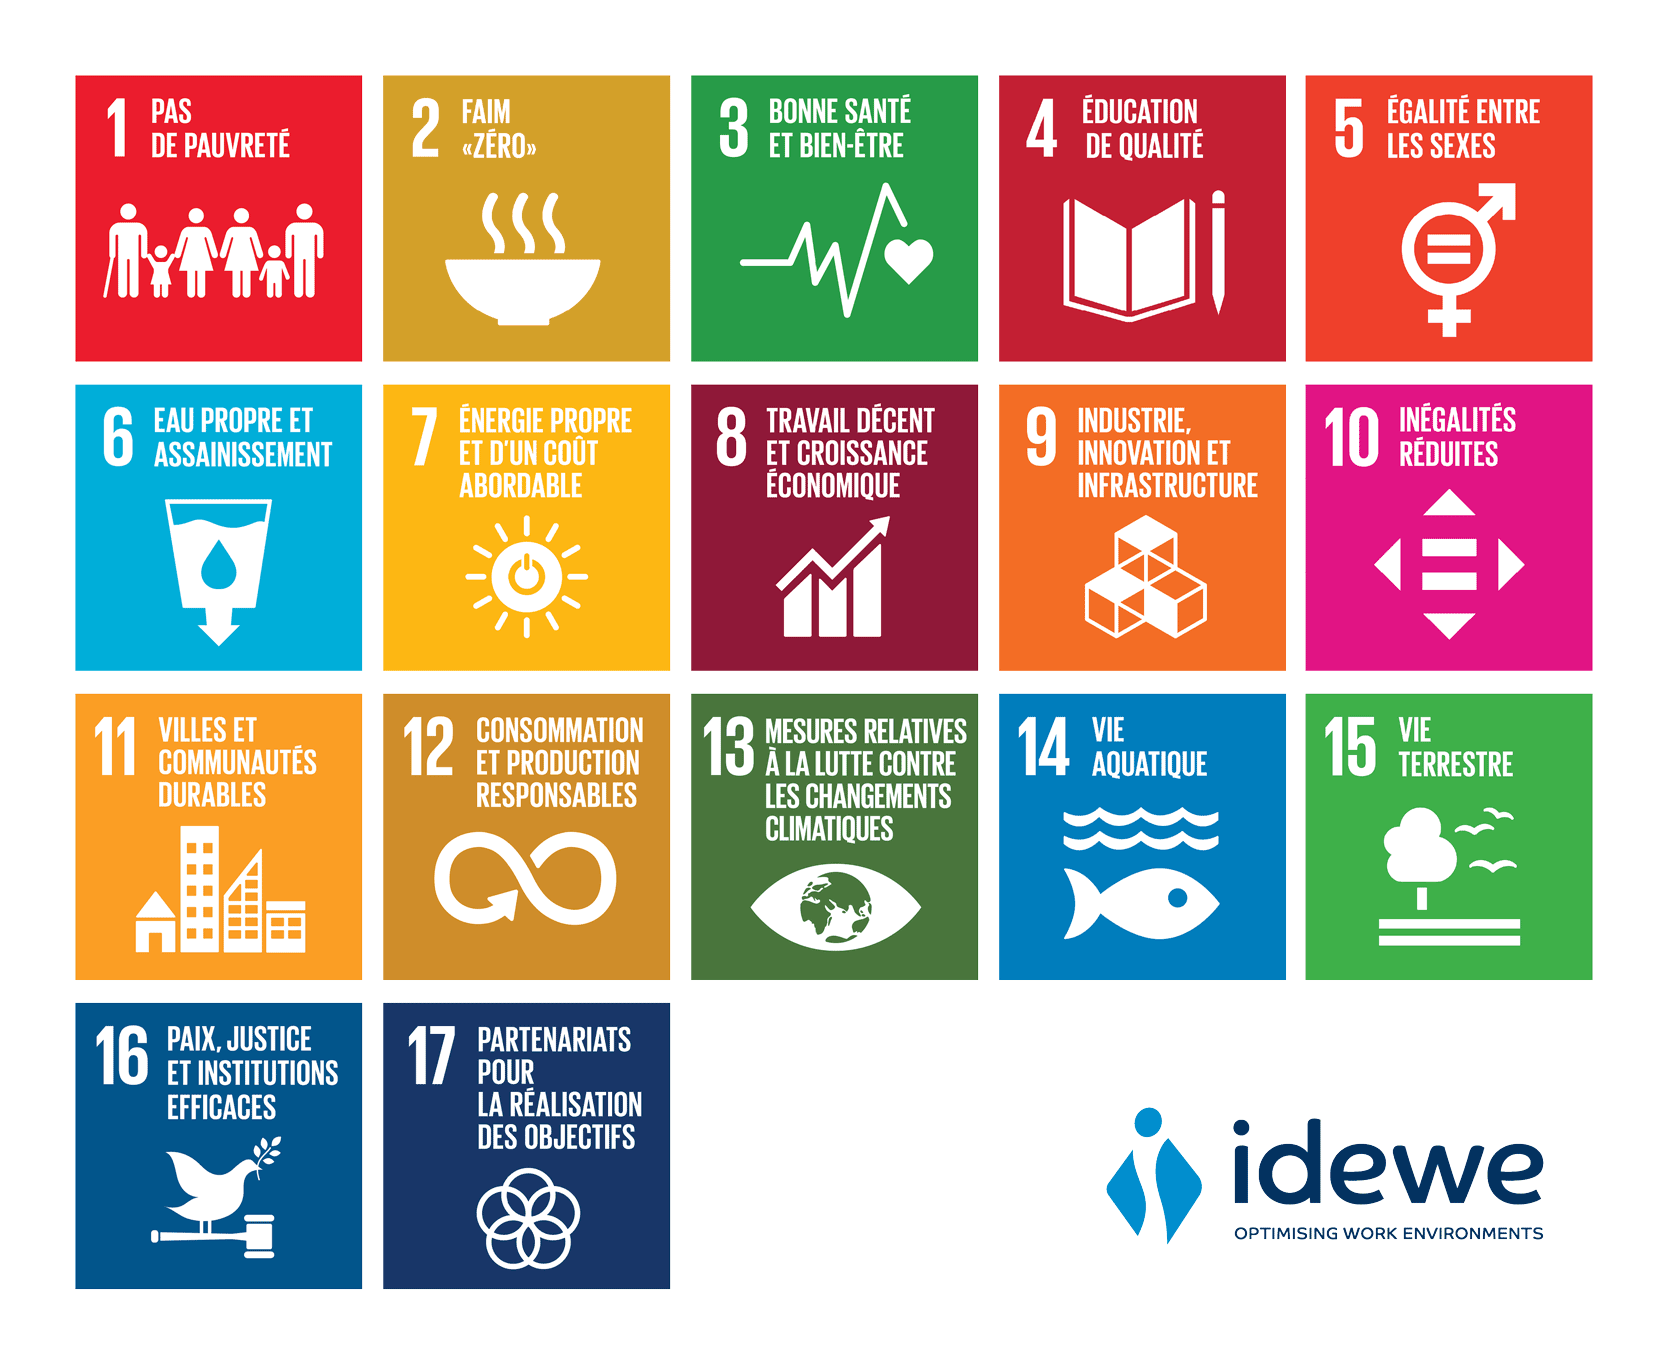 SDG's IDEWE